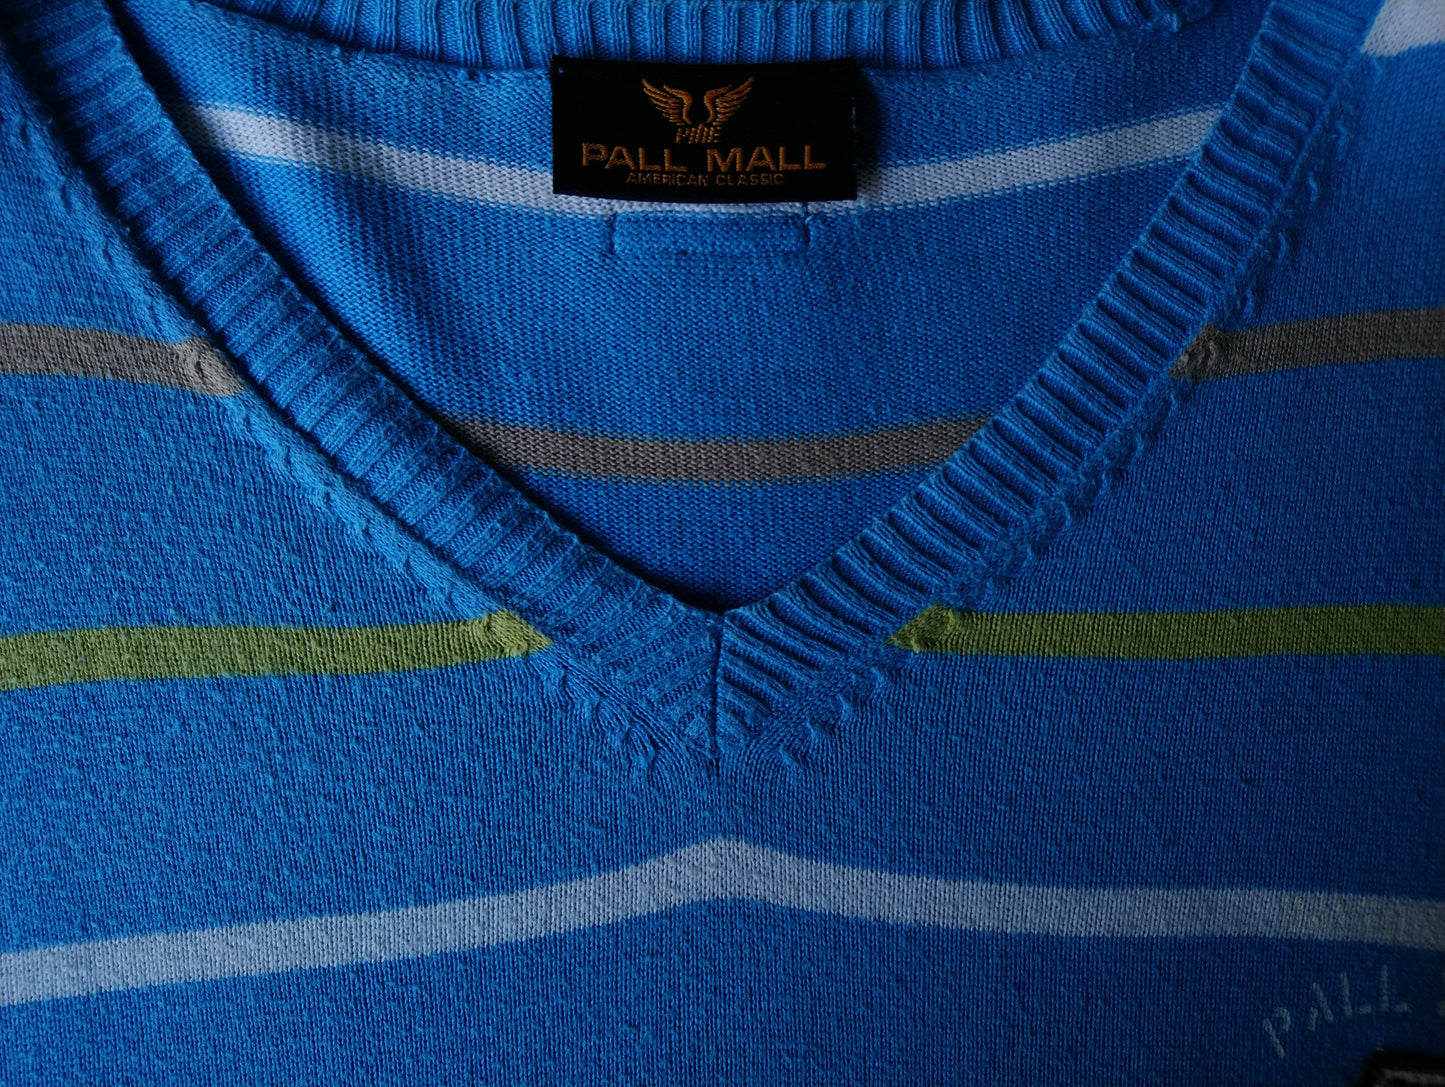 B Auswahl: PMME Pall Mall Sweater mit V-Ausschnitt. Blau grün braun weiß gestreift. Größe xl. Flecken